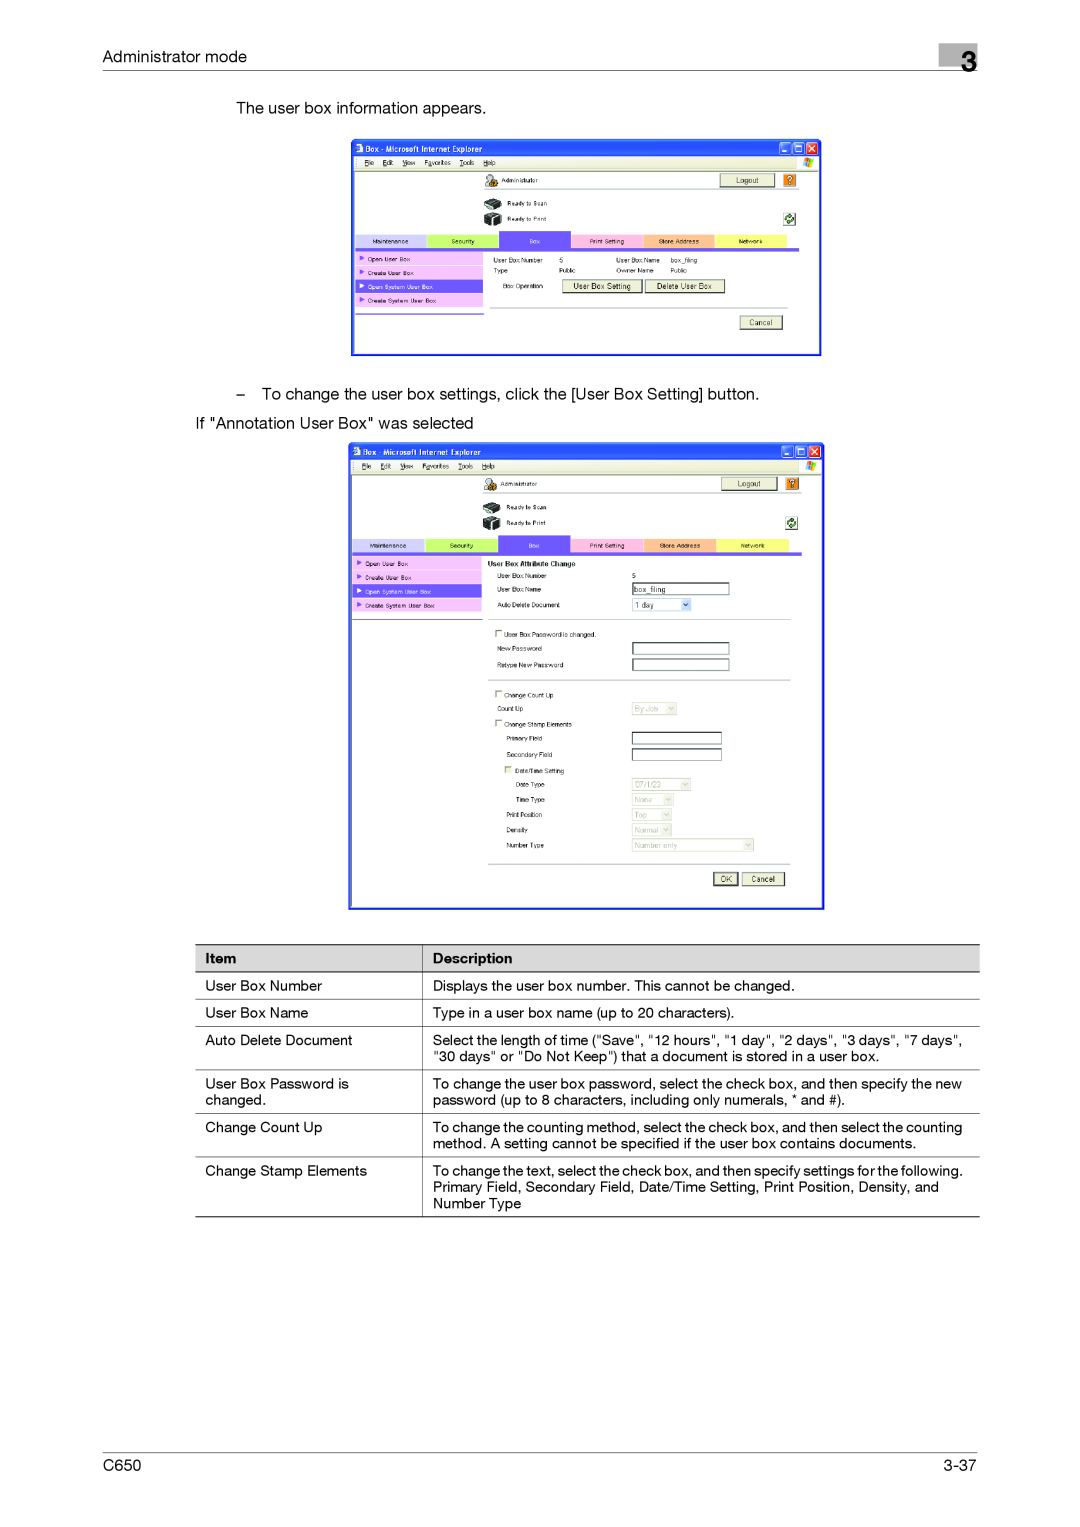 Konica Minolta C650 manual 3-37, Administrator mode, The user box information appears 